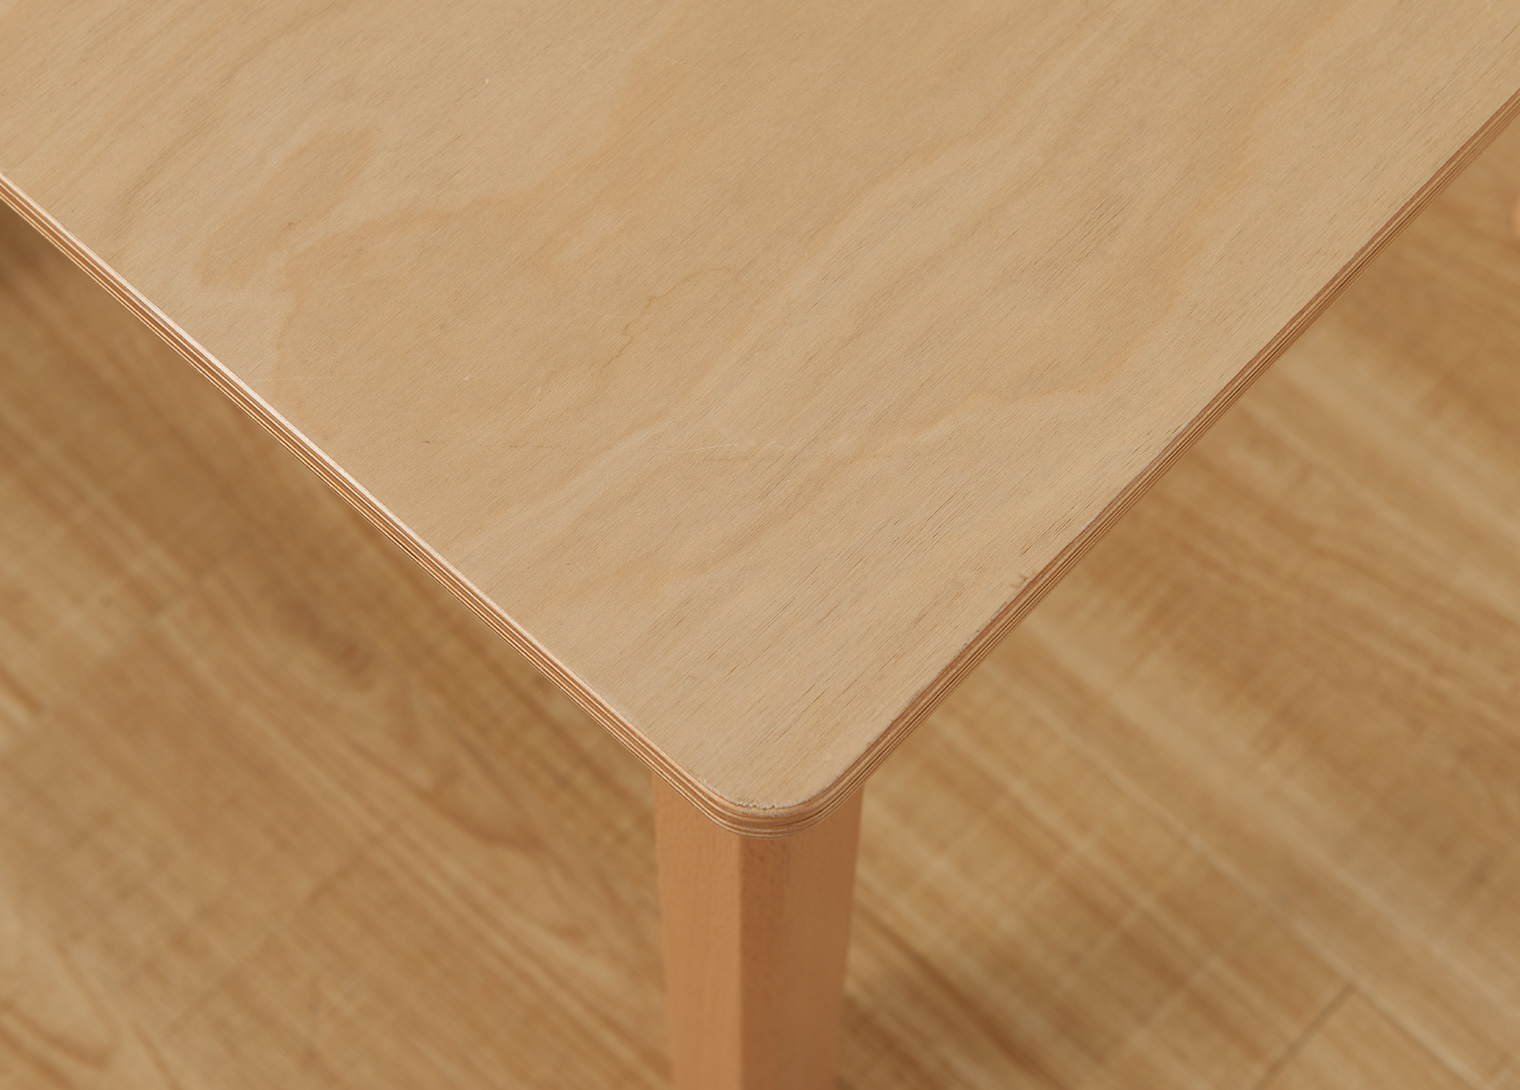 Inga Design Kids - 455H Square Table (Clear Varnish)